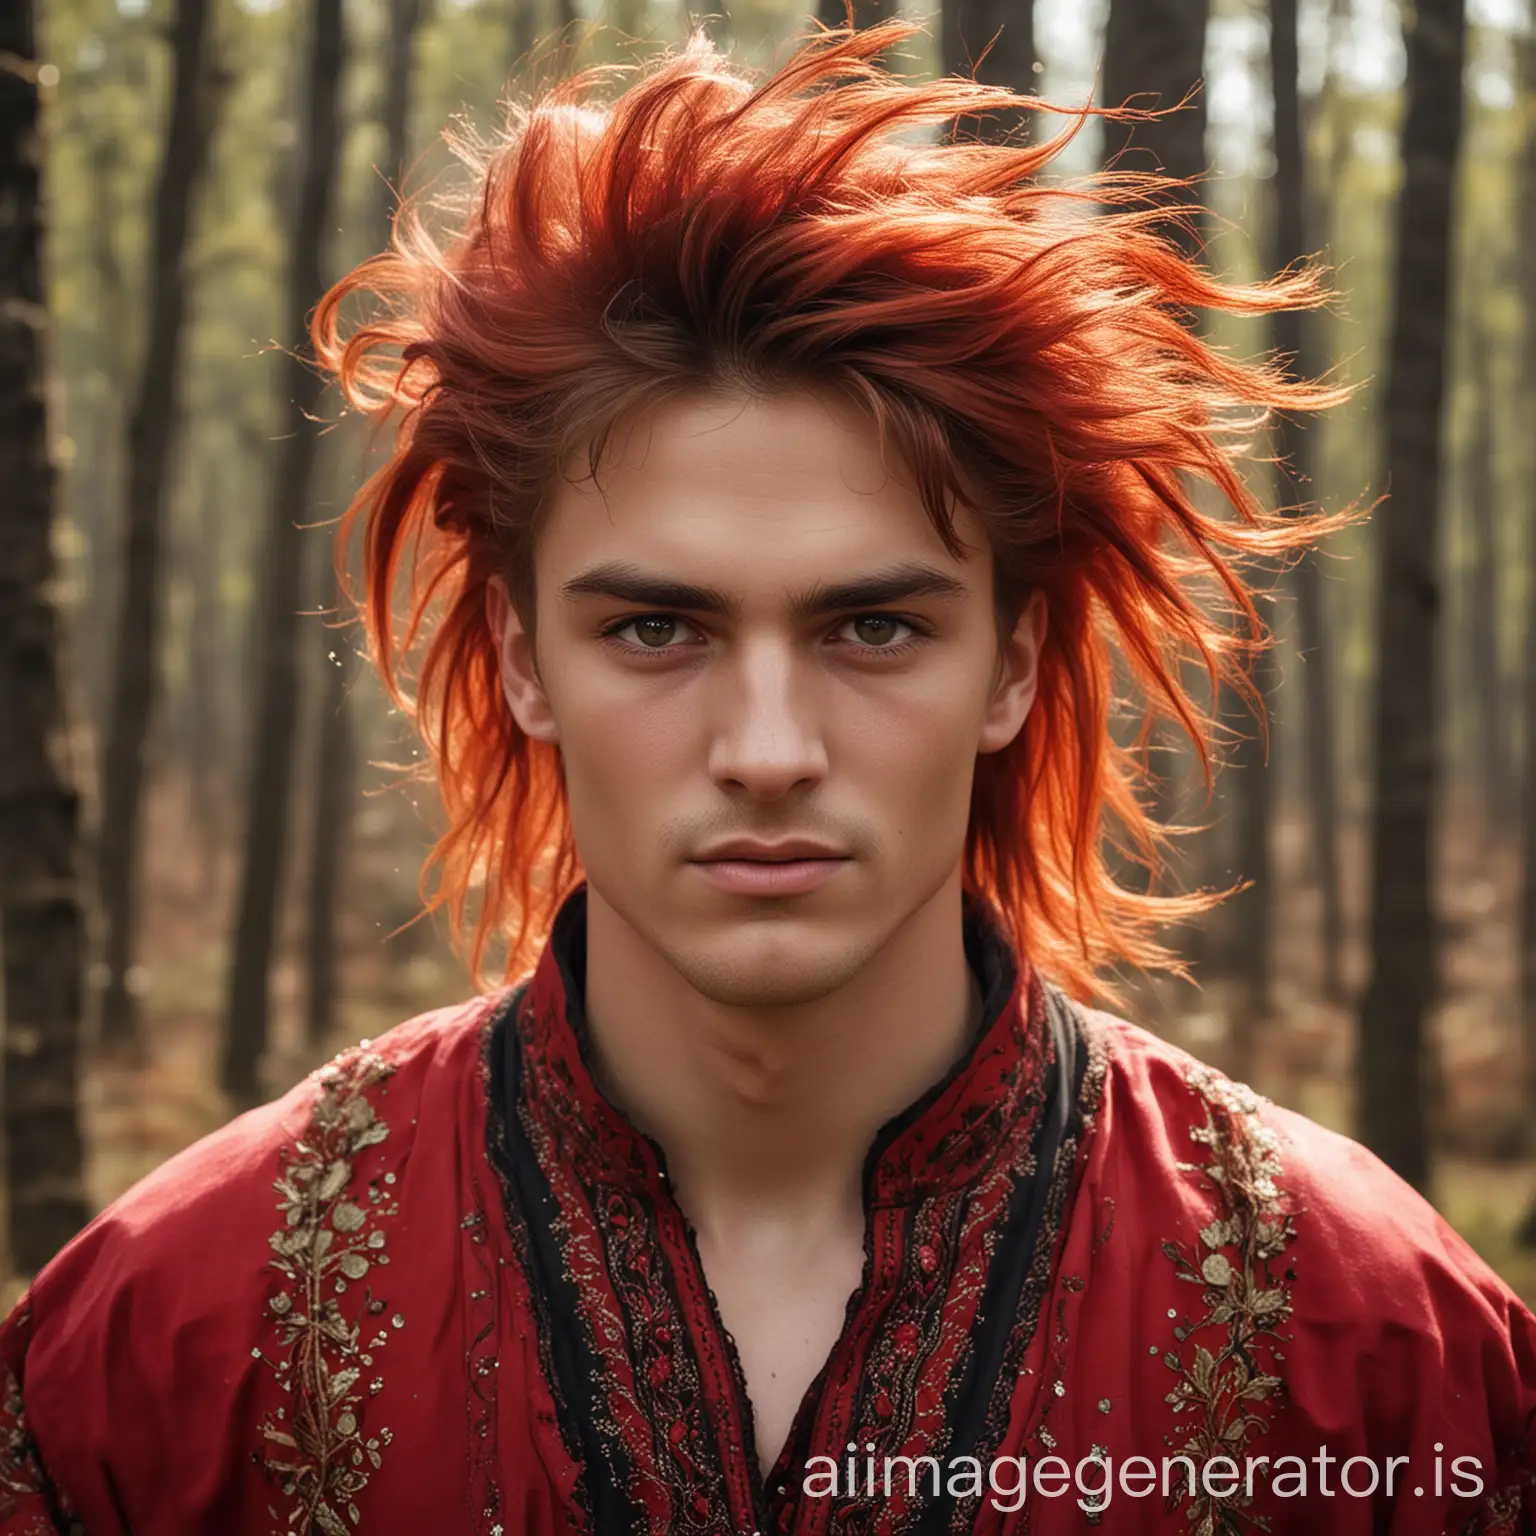 Energetic-Forest-Boy-in-Traditional-Ukrainian-Attire